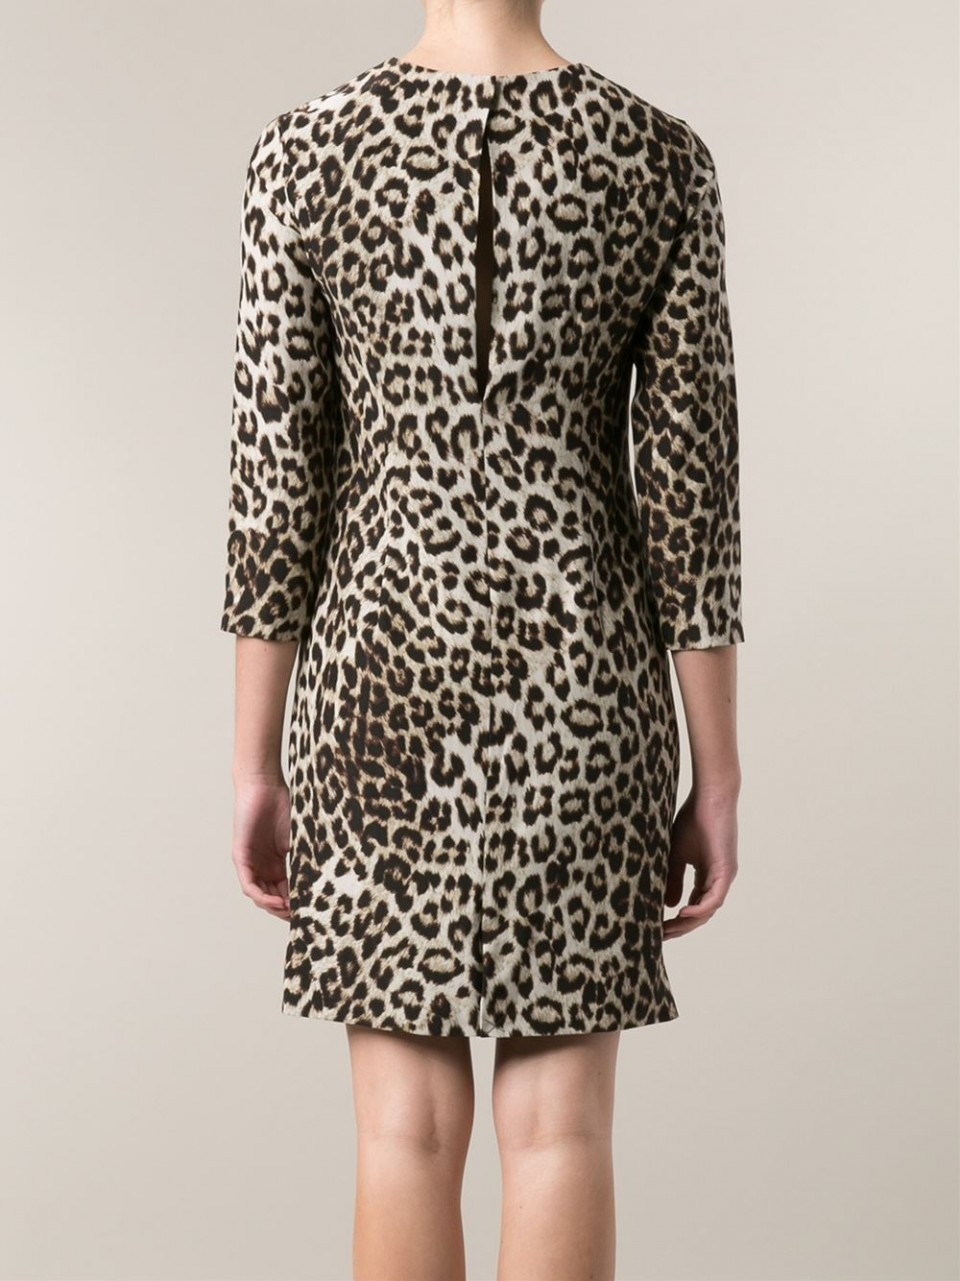 rag and bone leopard dress